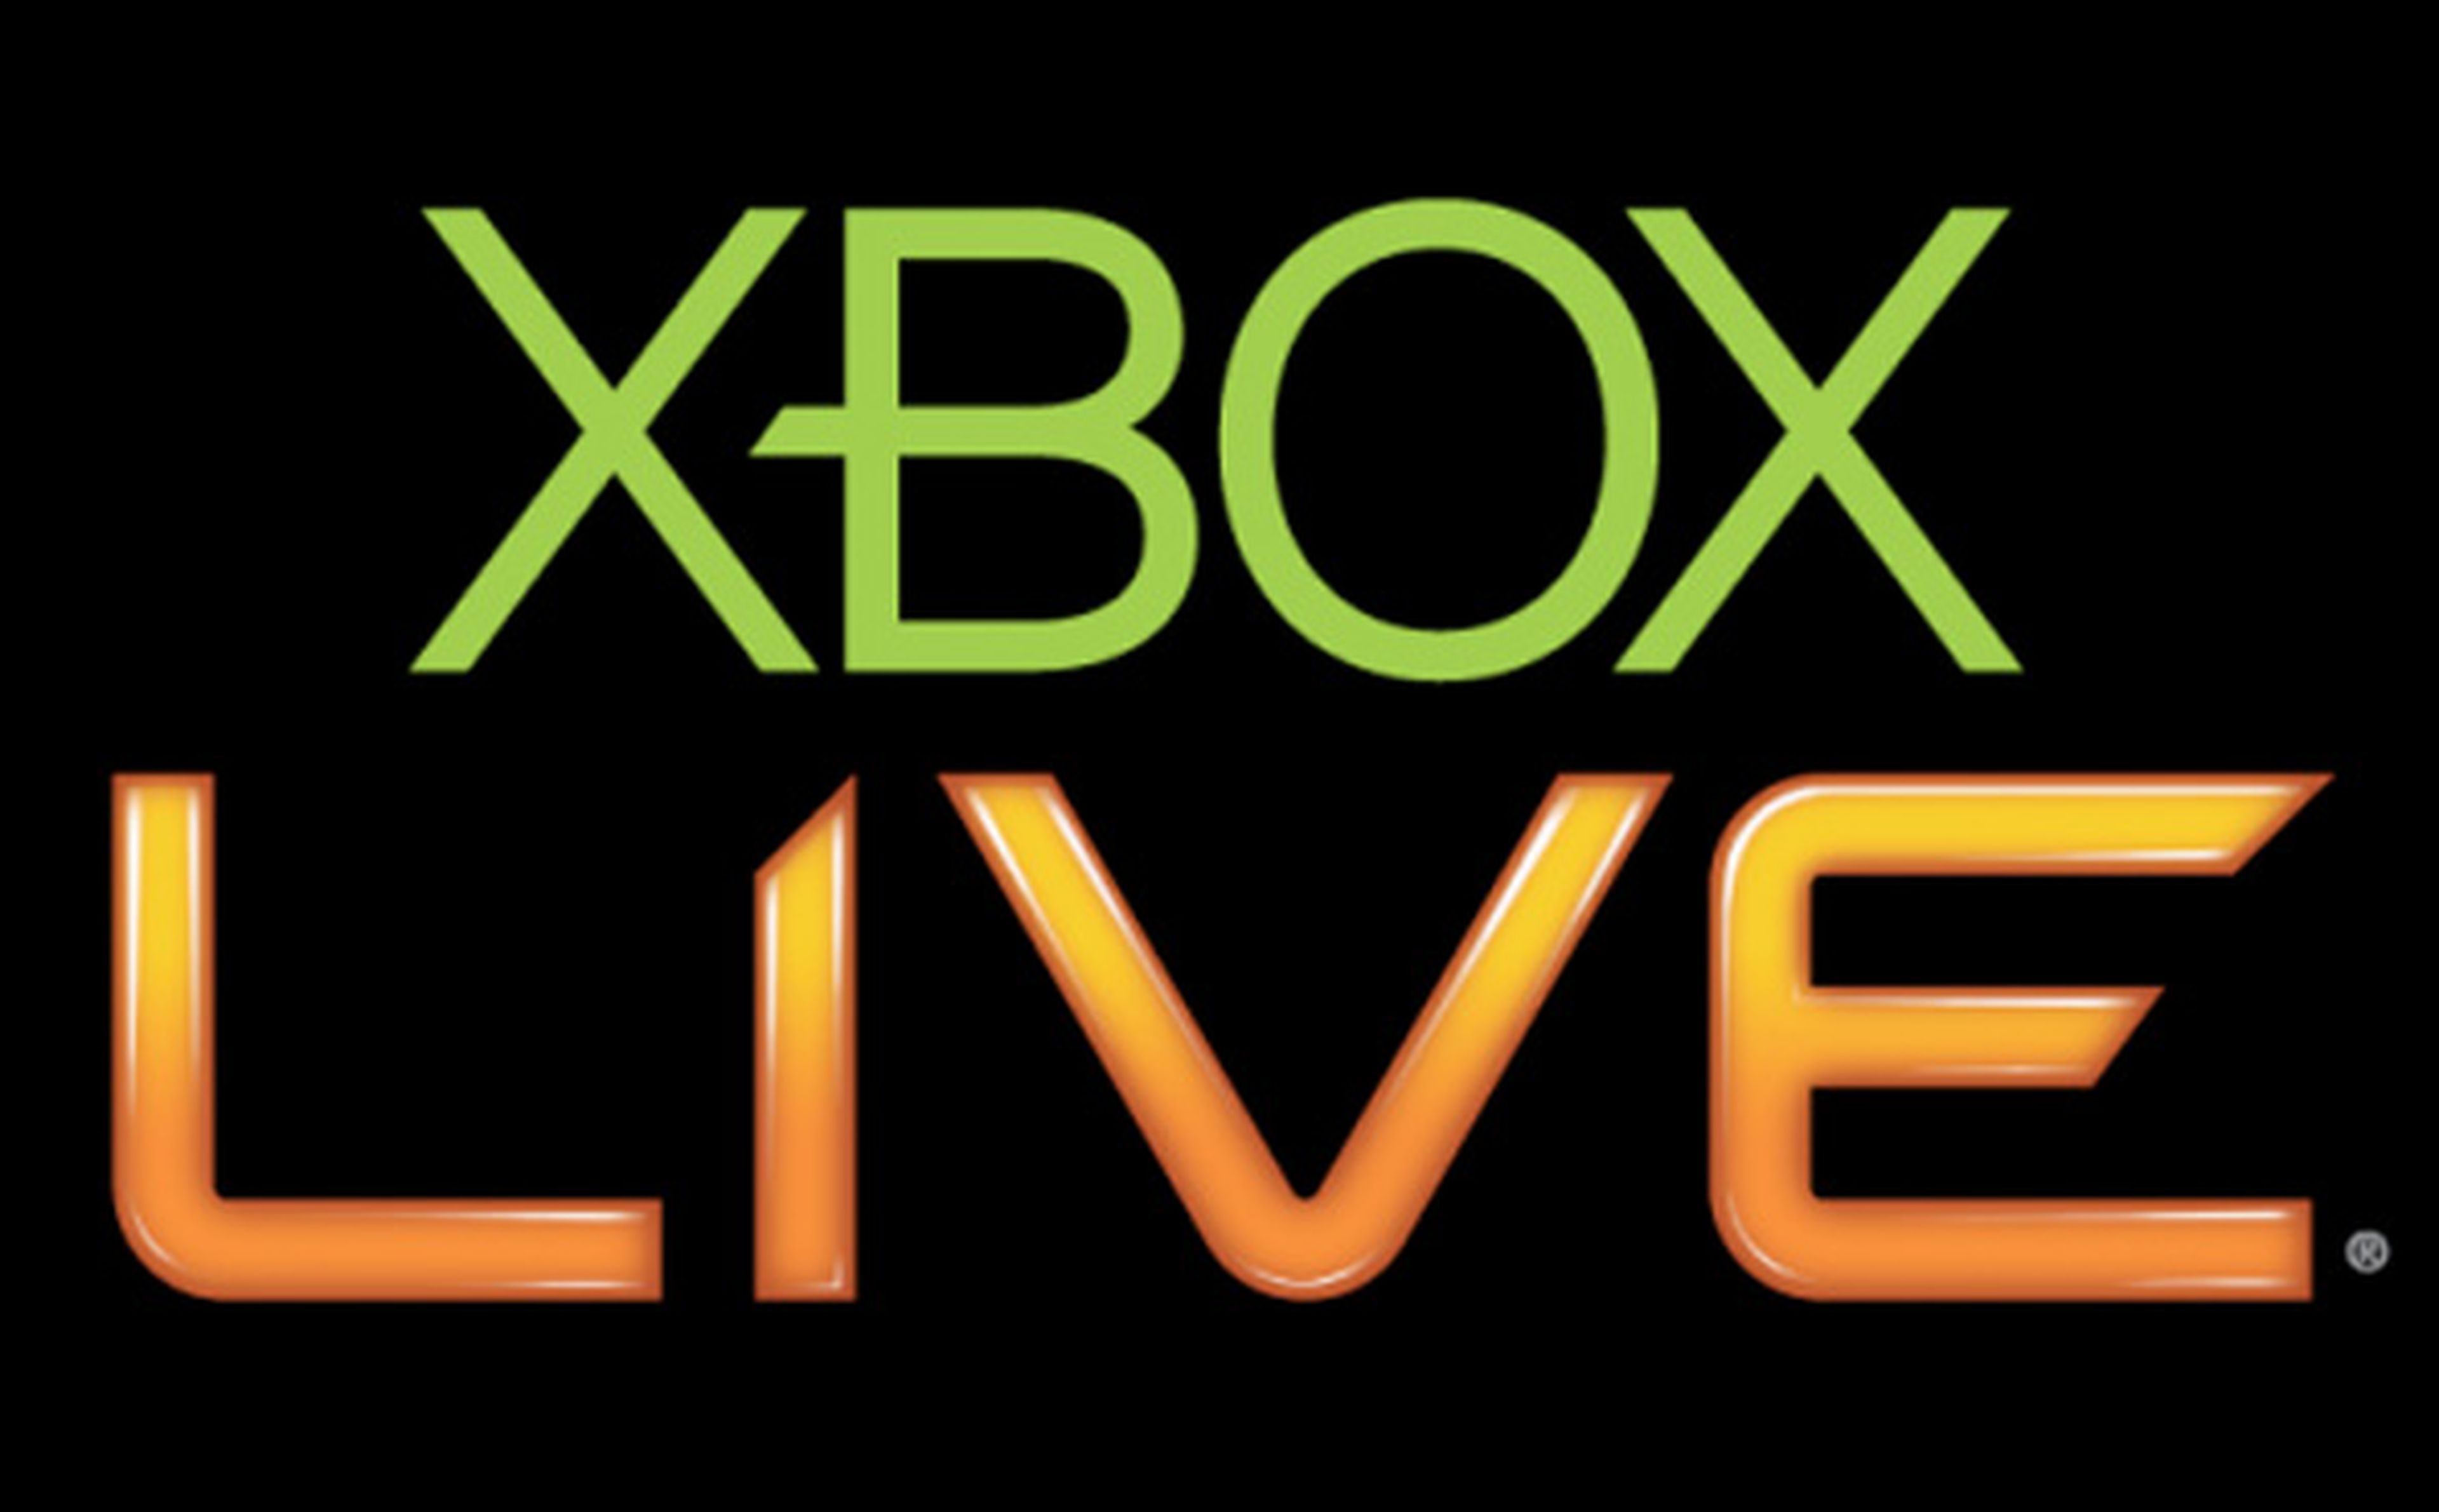 Xbox Live Silver cambia de nombre